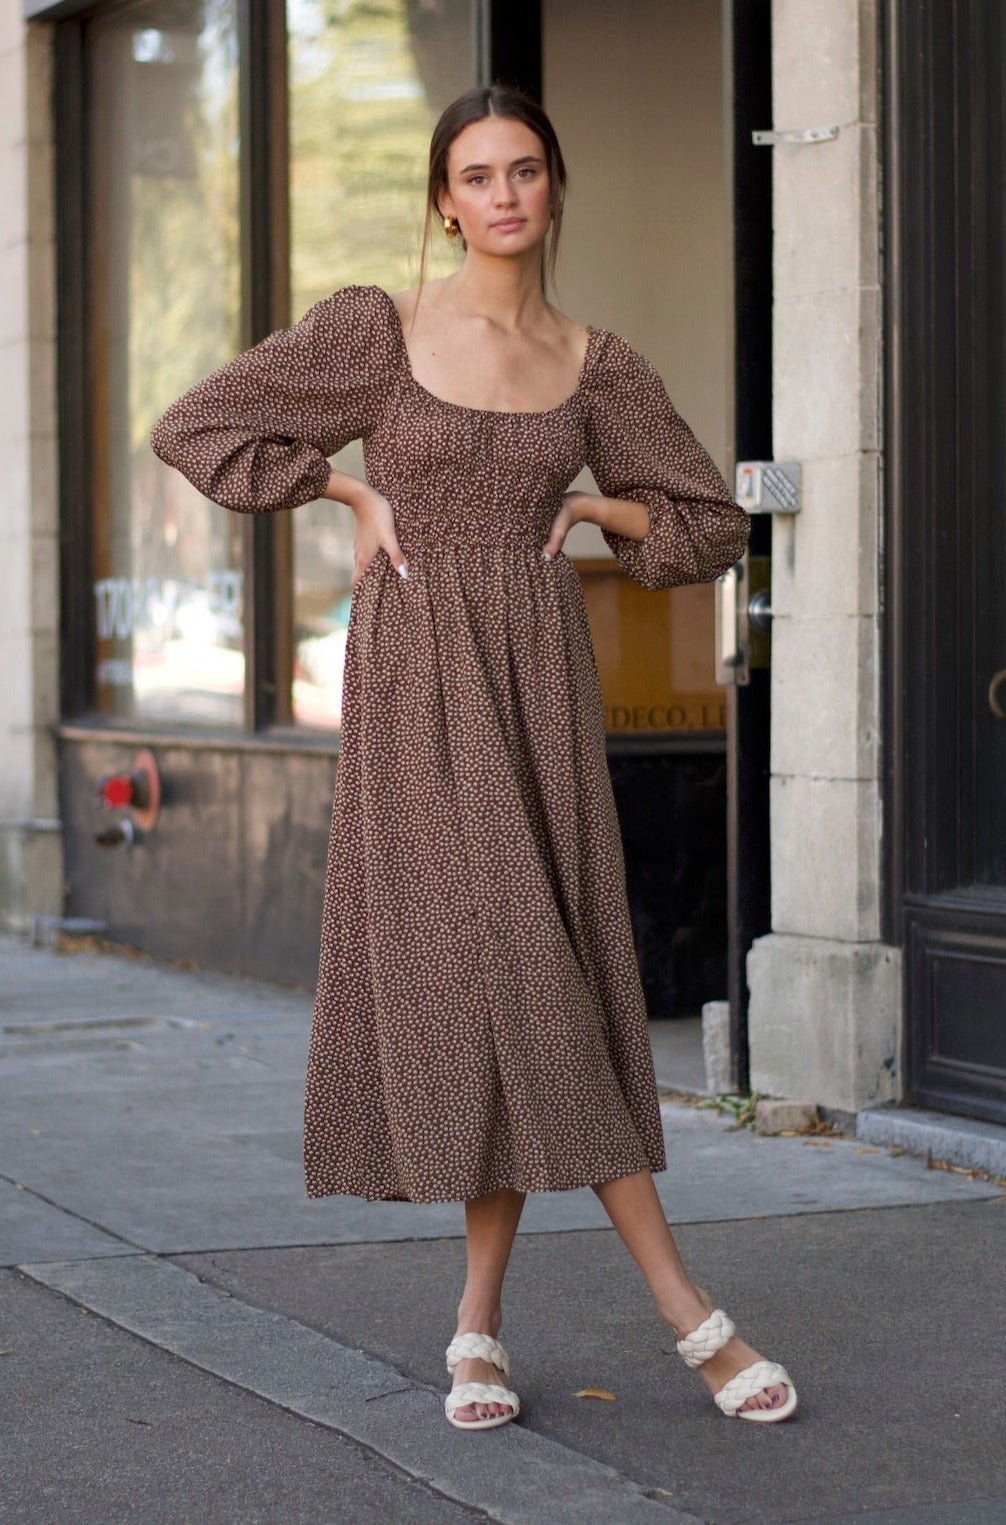 Style Redefined: Antony Morato and DKNY's Iconic Designer Clothing” | by  jyoti jain sofiya | Medium